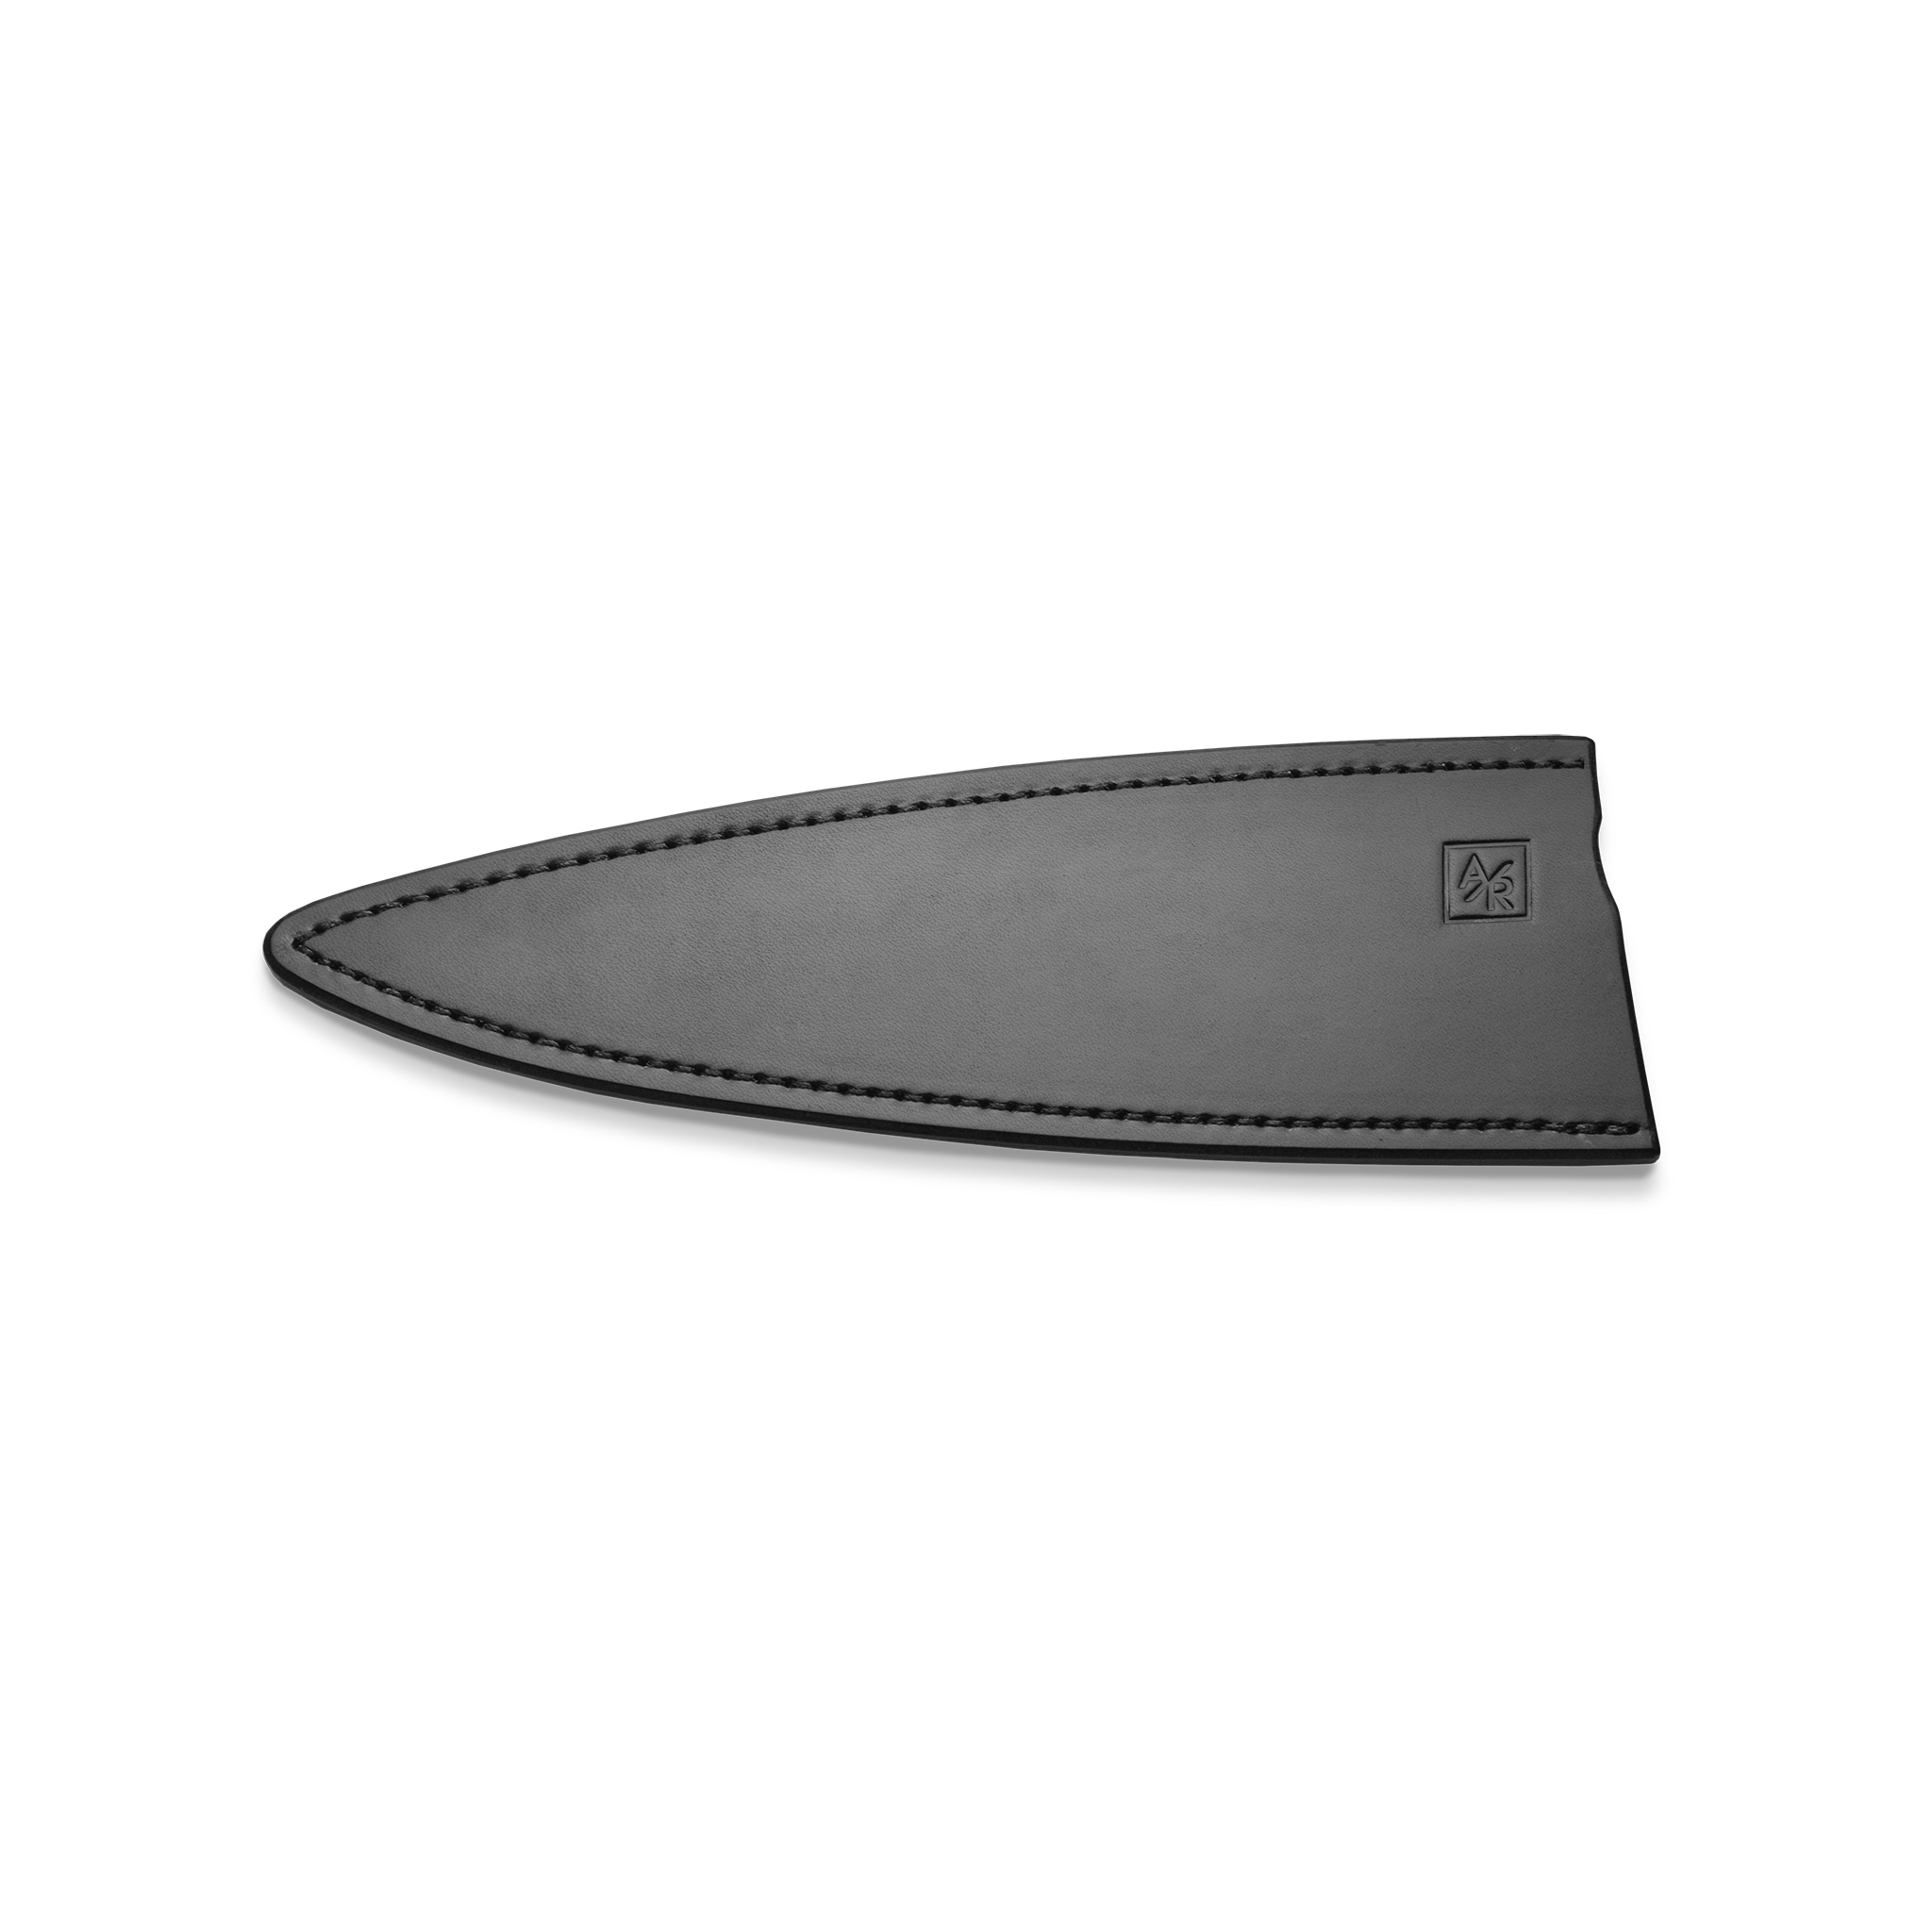 Personalized Kitchen Knife Sheath, Chef Knife Sheath, Custom Knife Sheath,  Universal Knife Sheath 